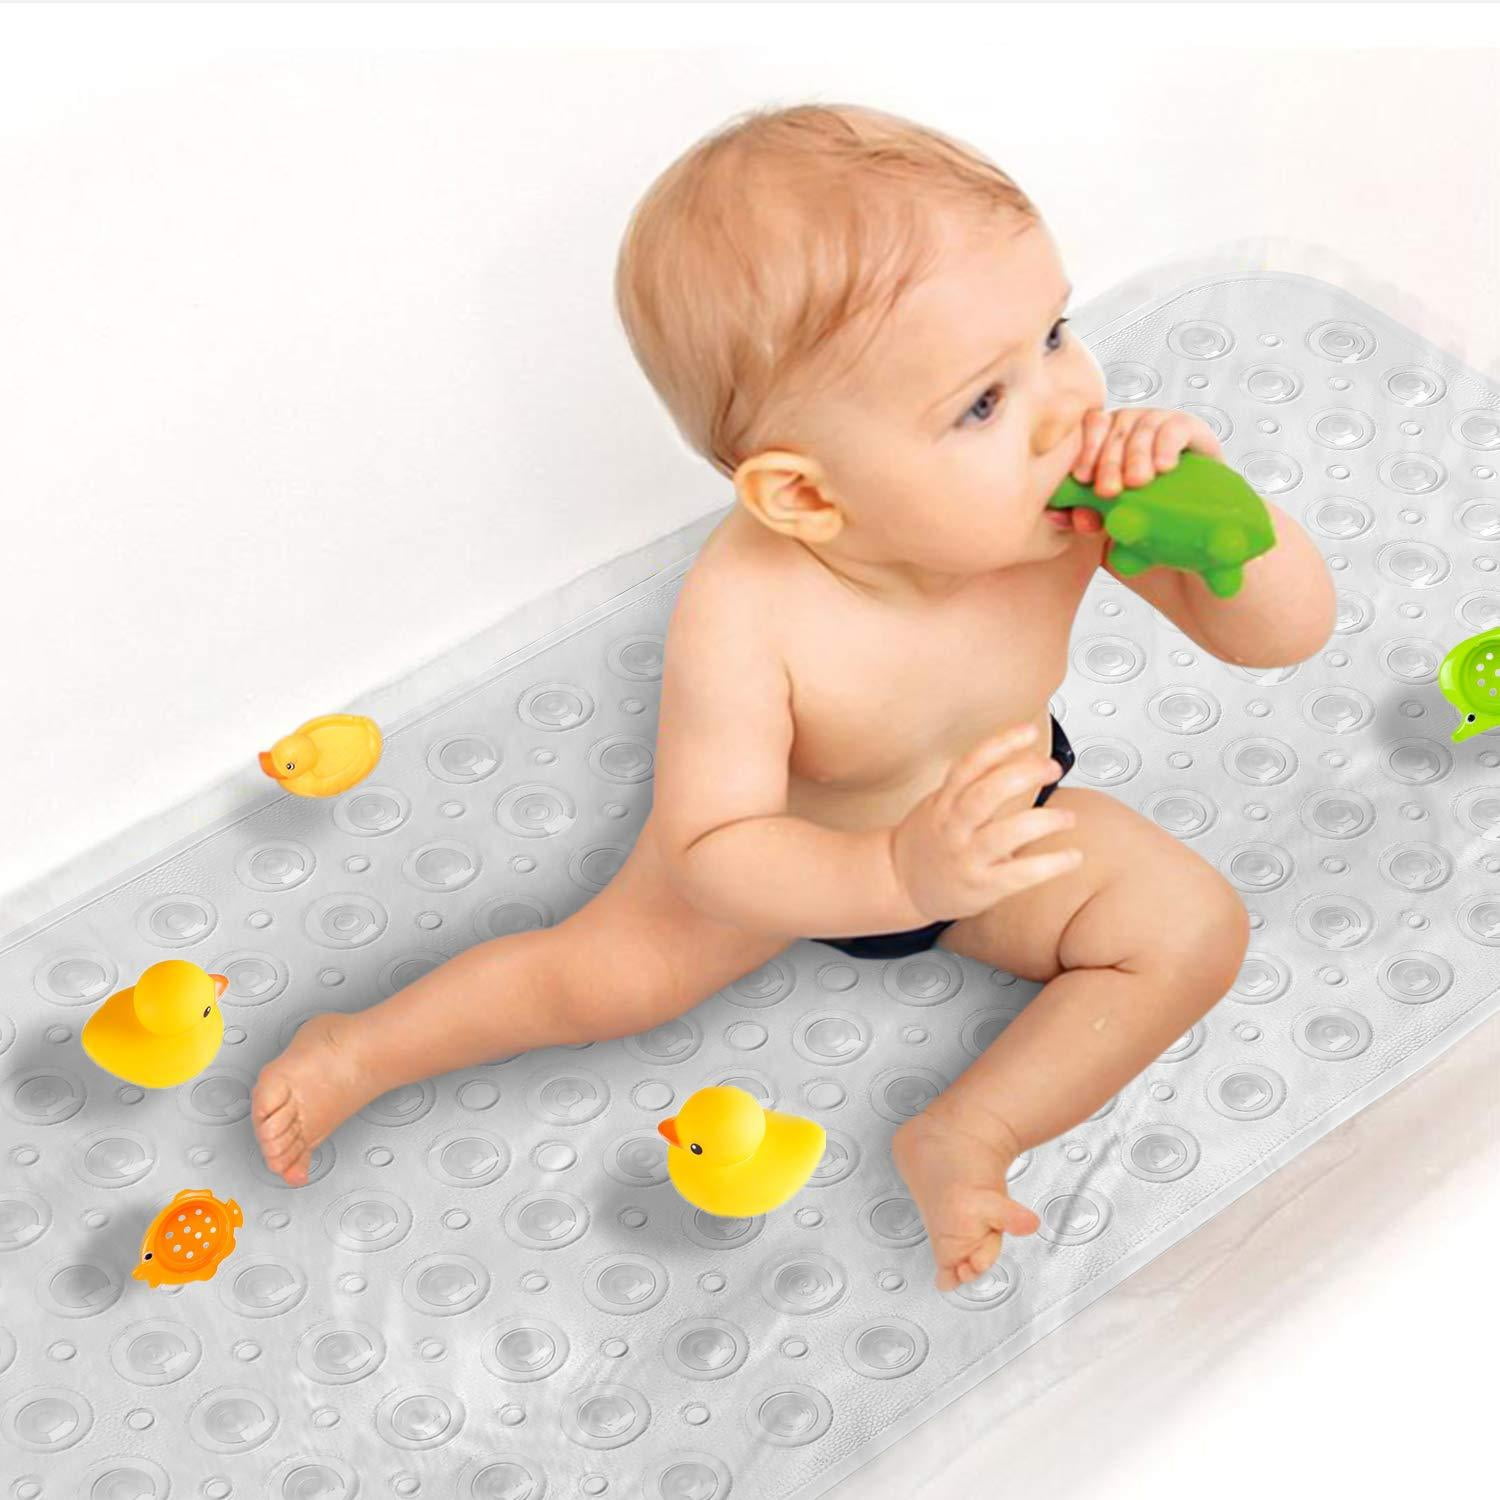 Sheepping Baby Bath Mat Non Slip Extra Long Bathtub Mat for Kids Blue 40 X 16 Inch with Bathroom Rugs Microfiber Plush Bath Mat Grey,32x 20 